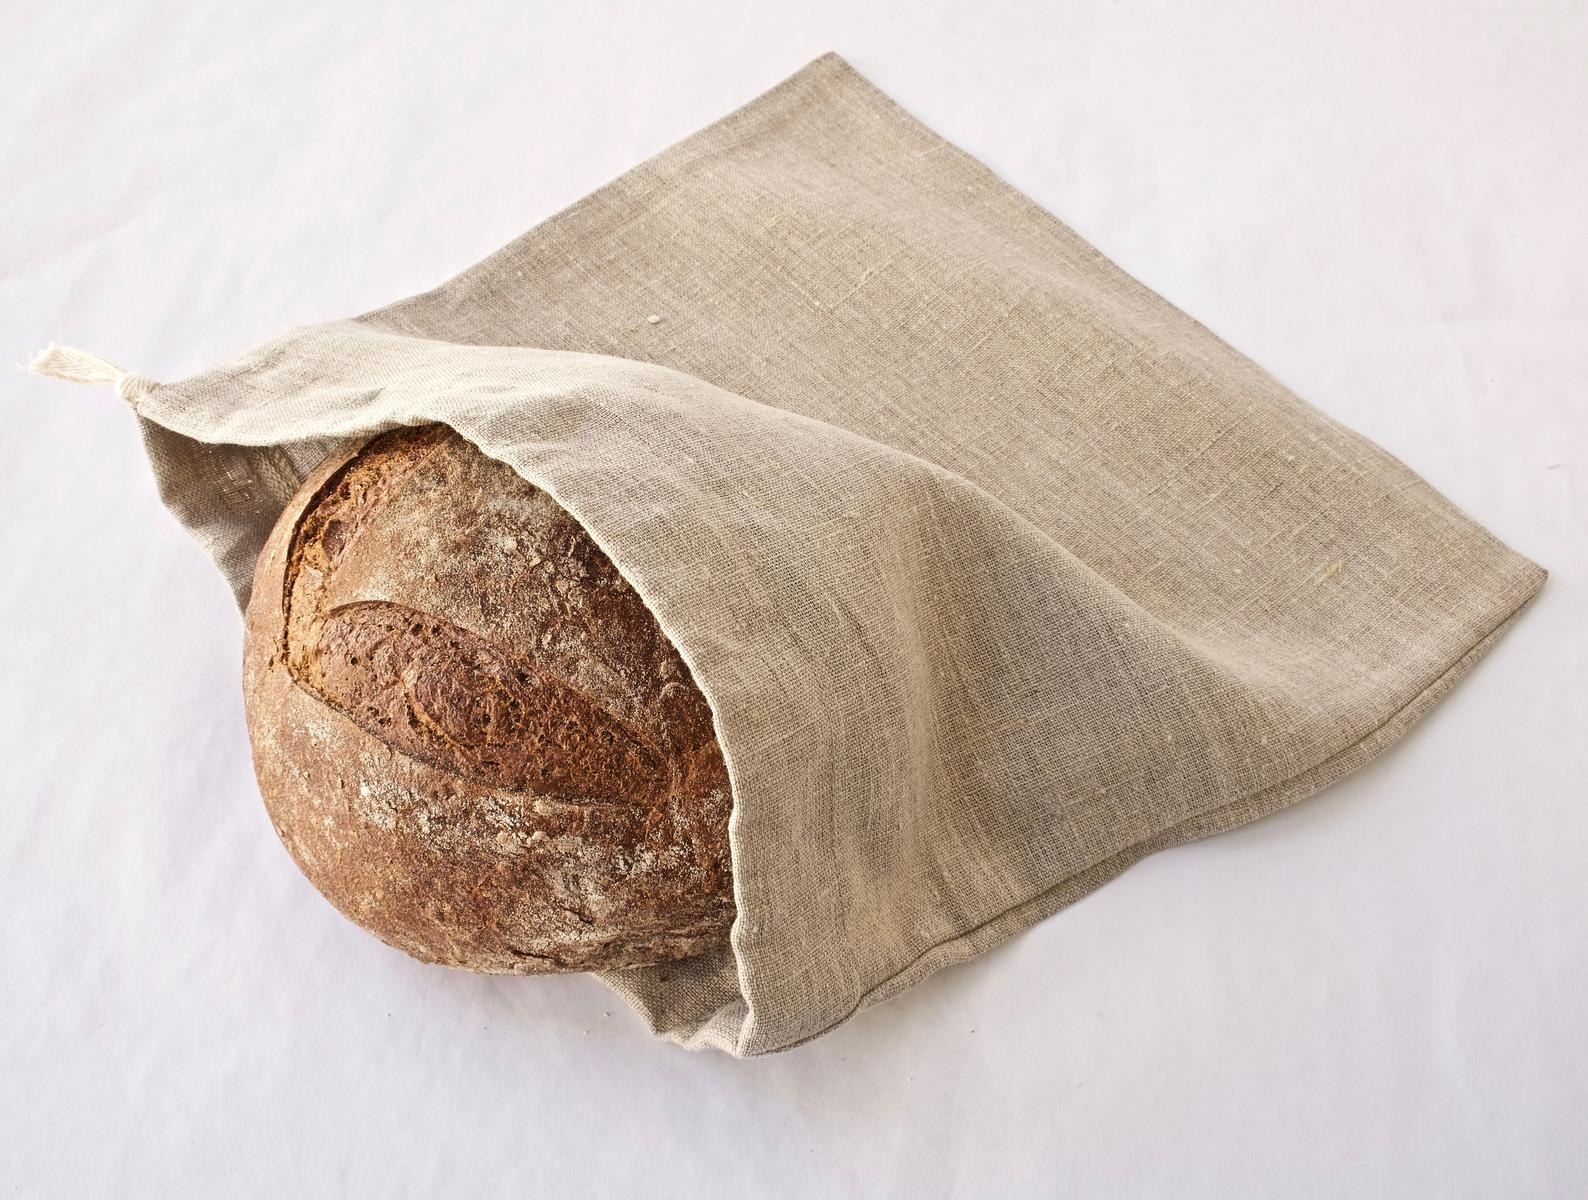 tan linen bag with a sourdough bread loaf inside